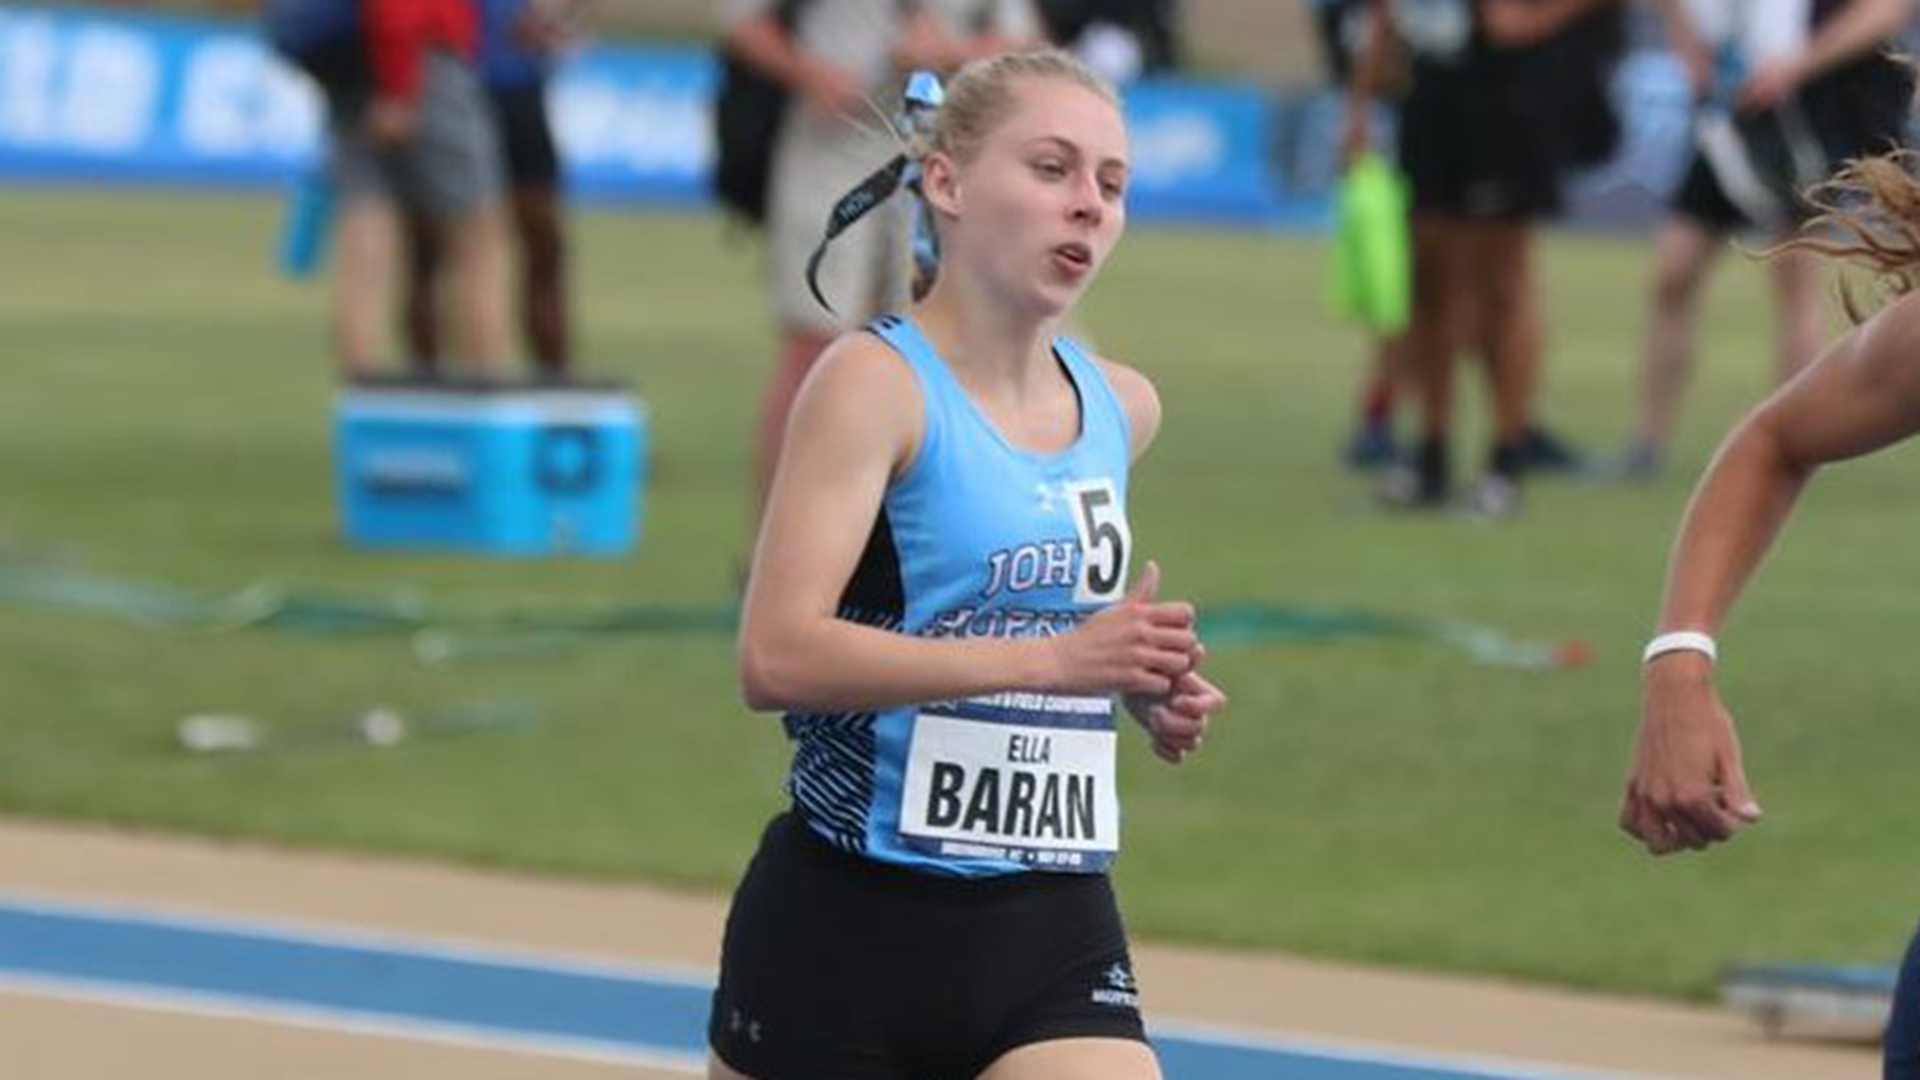 Ella Baran, Johns Hopkins, Track Athlete of the Week